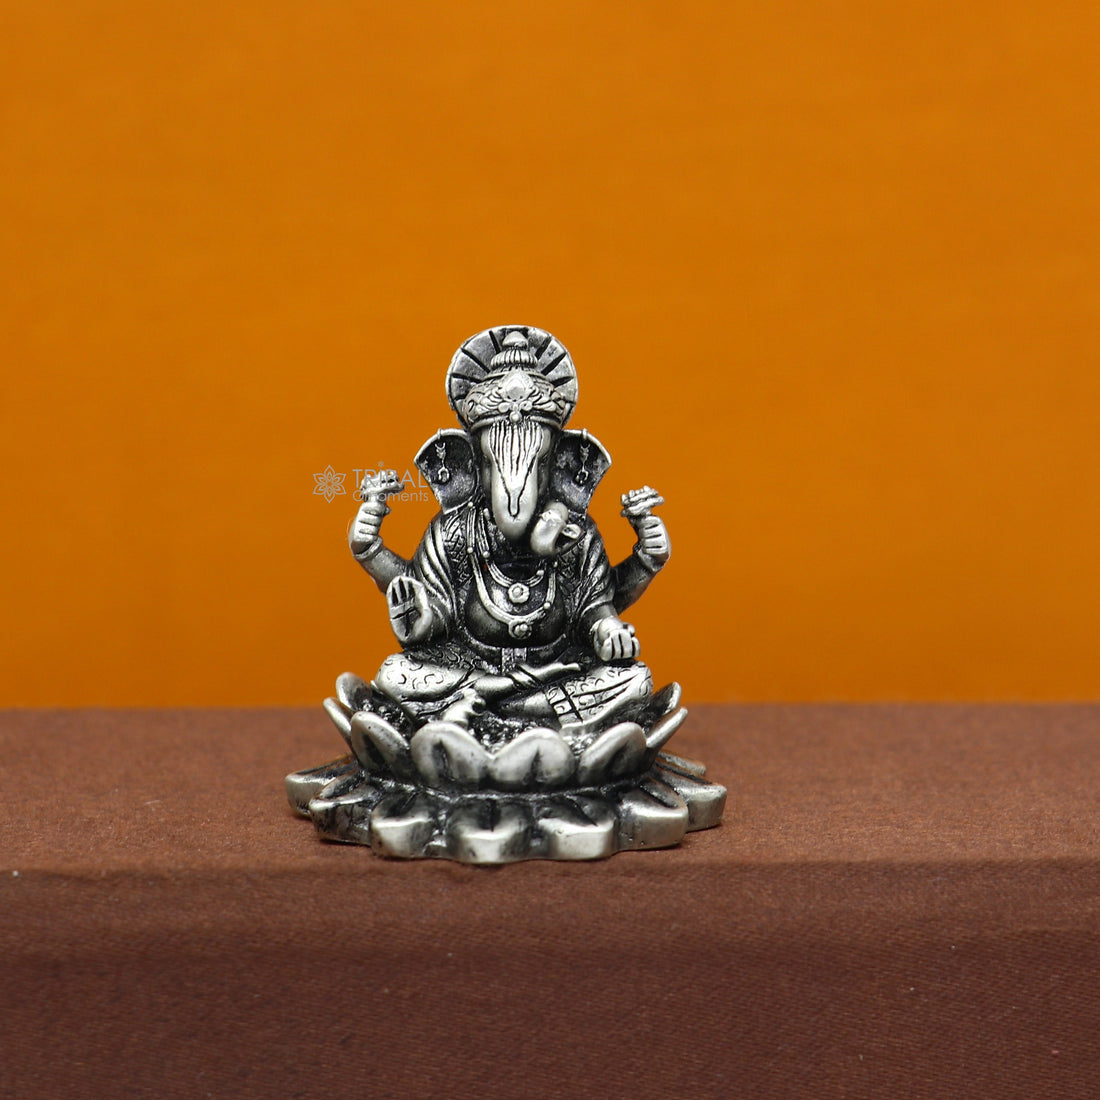 1.5" 925 Sterling silver lord Ganesha Kamlasan statue puja article figurine, Diwali puja Divine silver article of prosperity& wealth art714 - TRIBAL ORNAMENTS